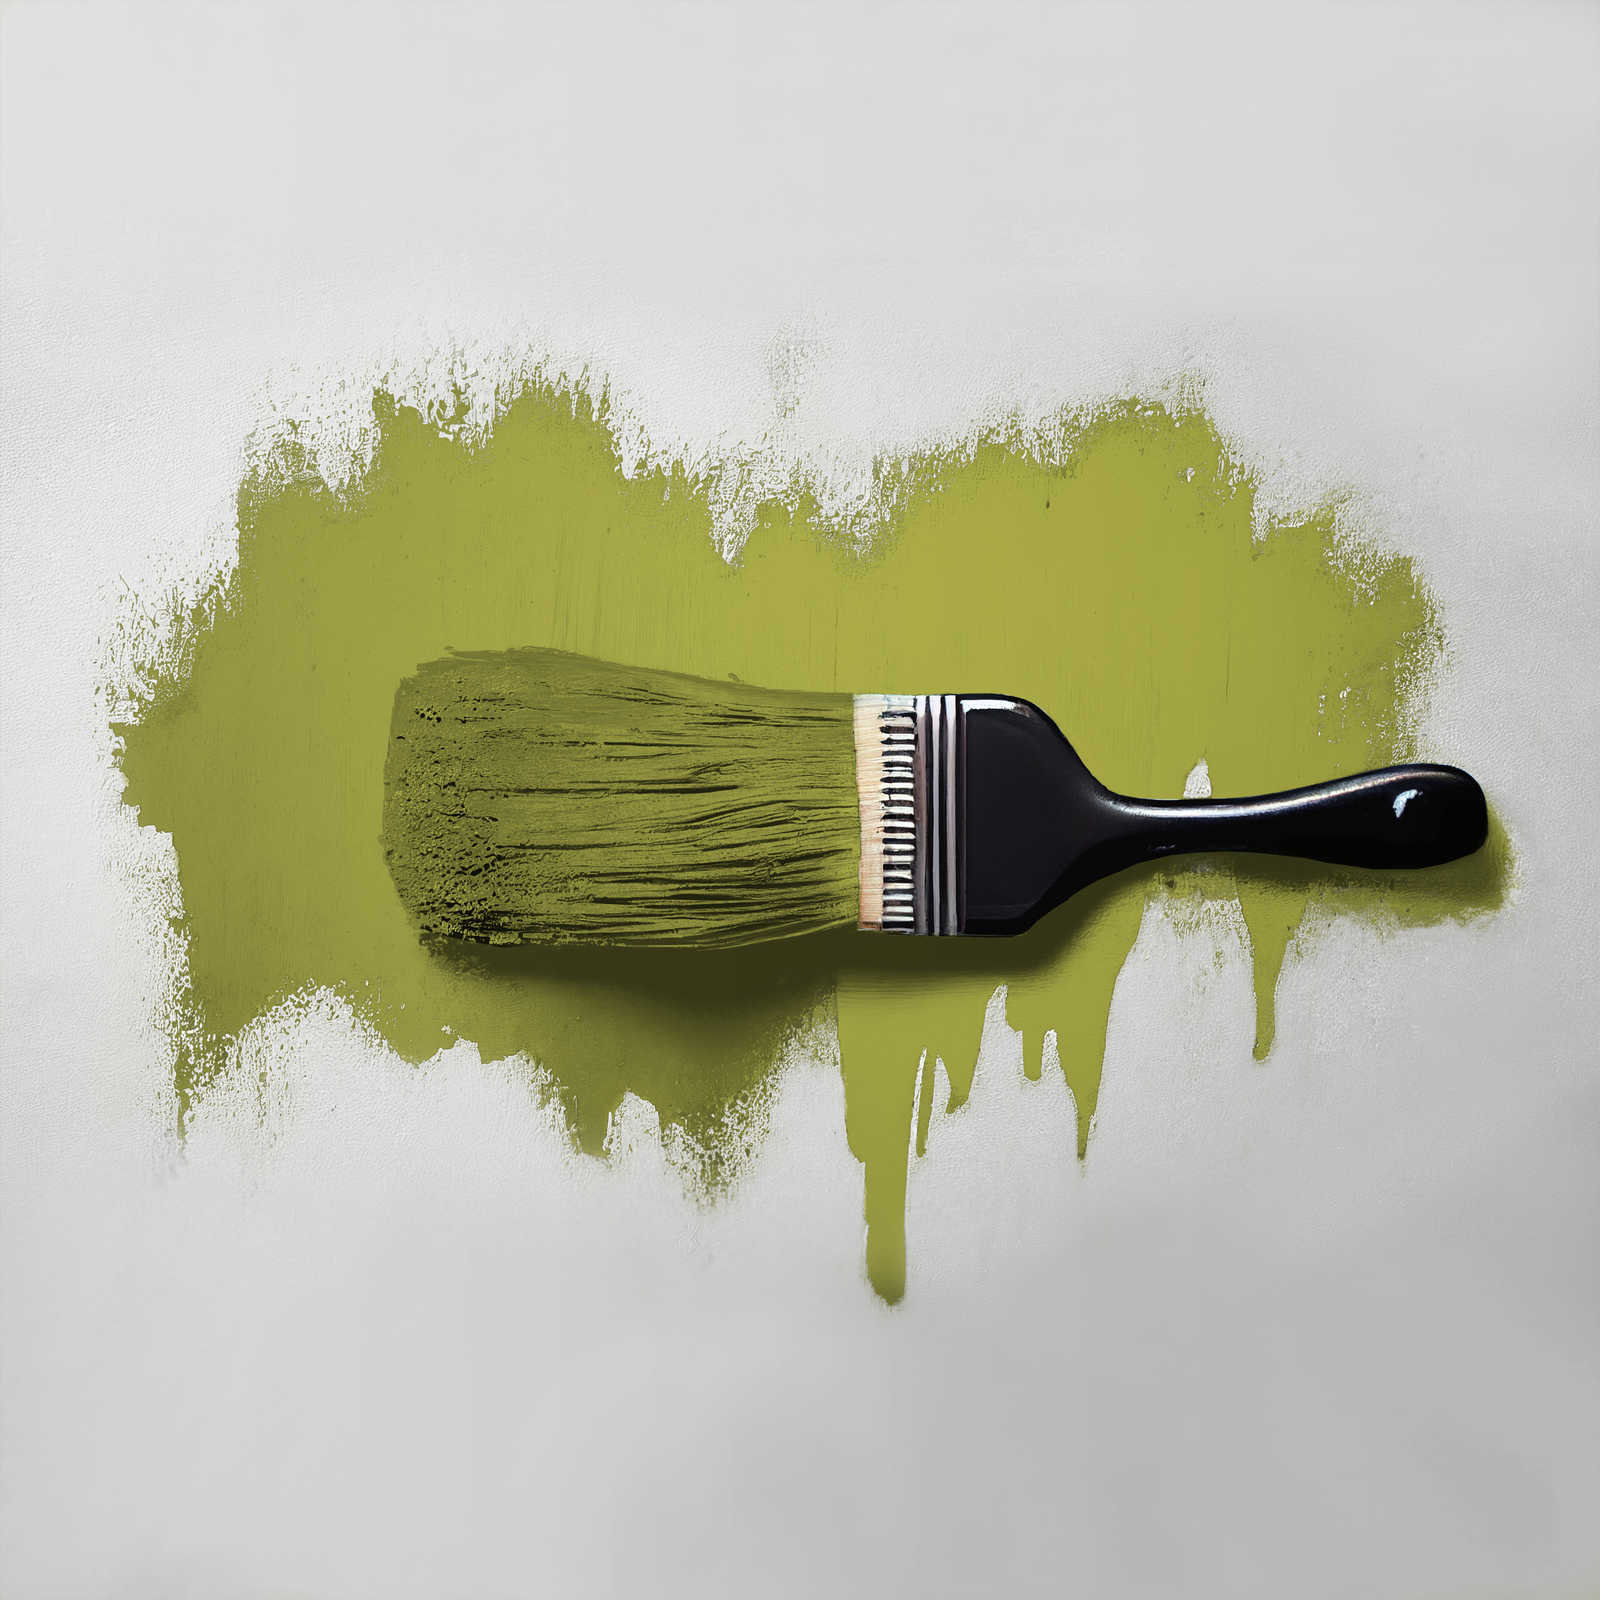             Pintura mural TCK4009 »Kitchy Kiwi« en amarillo-verde brillante – 2,5 litro
        